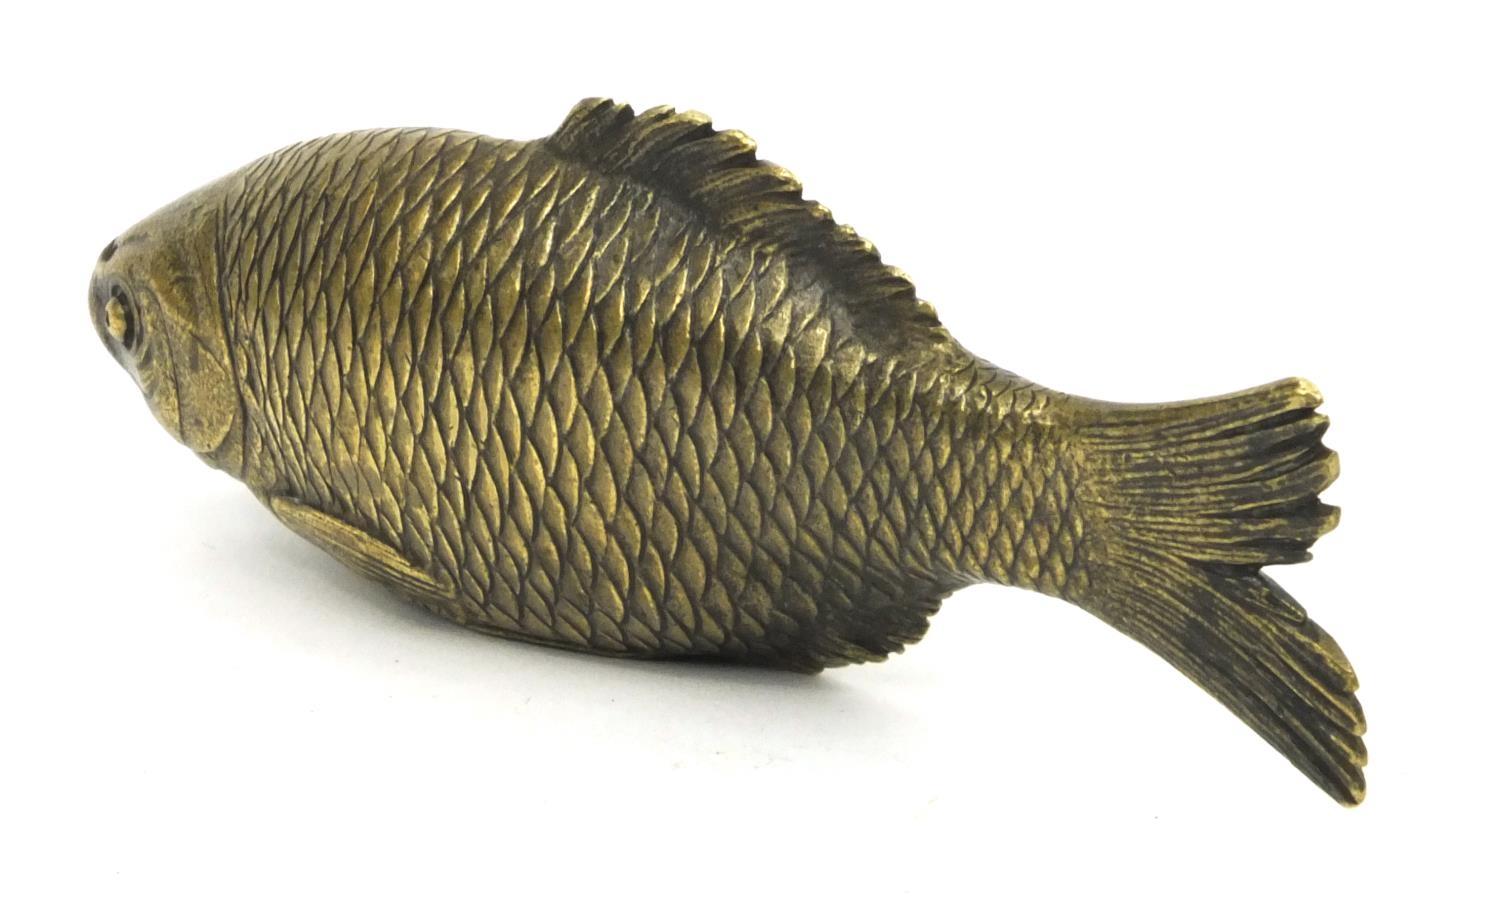 Victorian bronze fish paperweight, 12cm diameter - Image 3 of 3